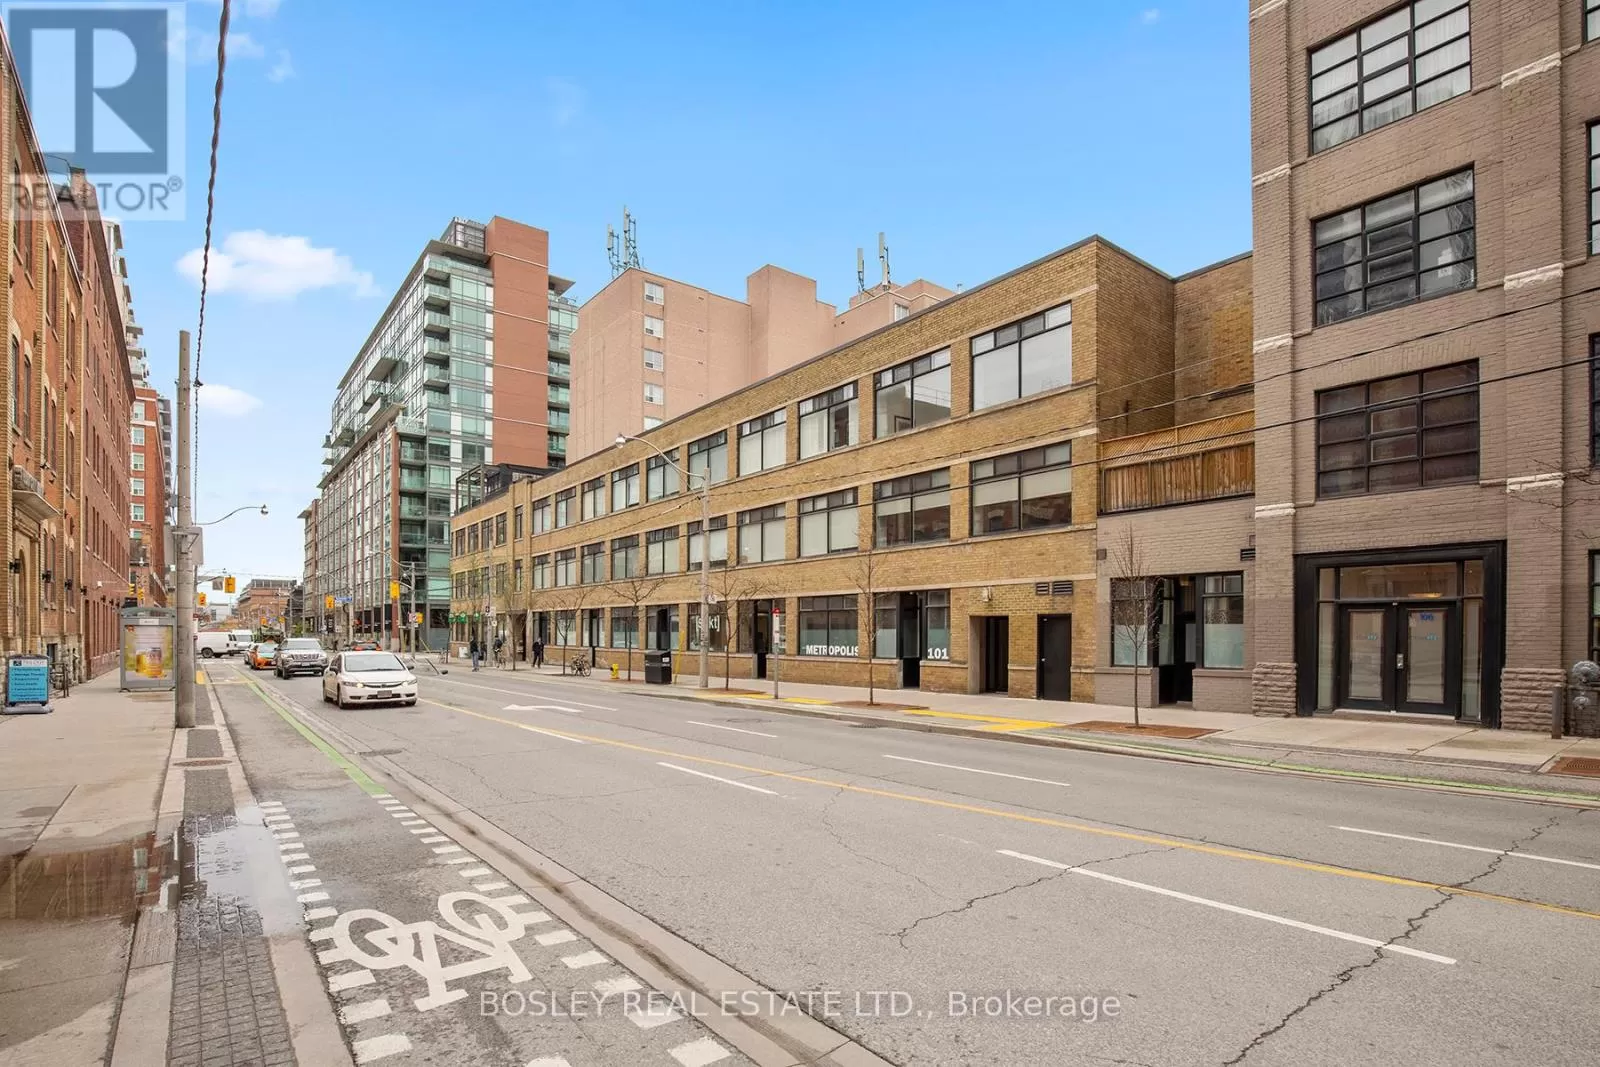 Apartment for rent: 101 - 80 Sherbourne Street, Toronto, Ontario M5A 2R1